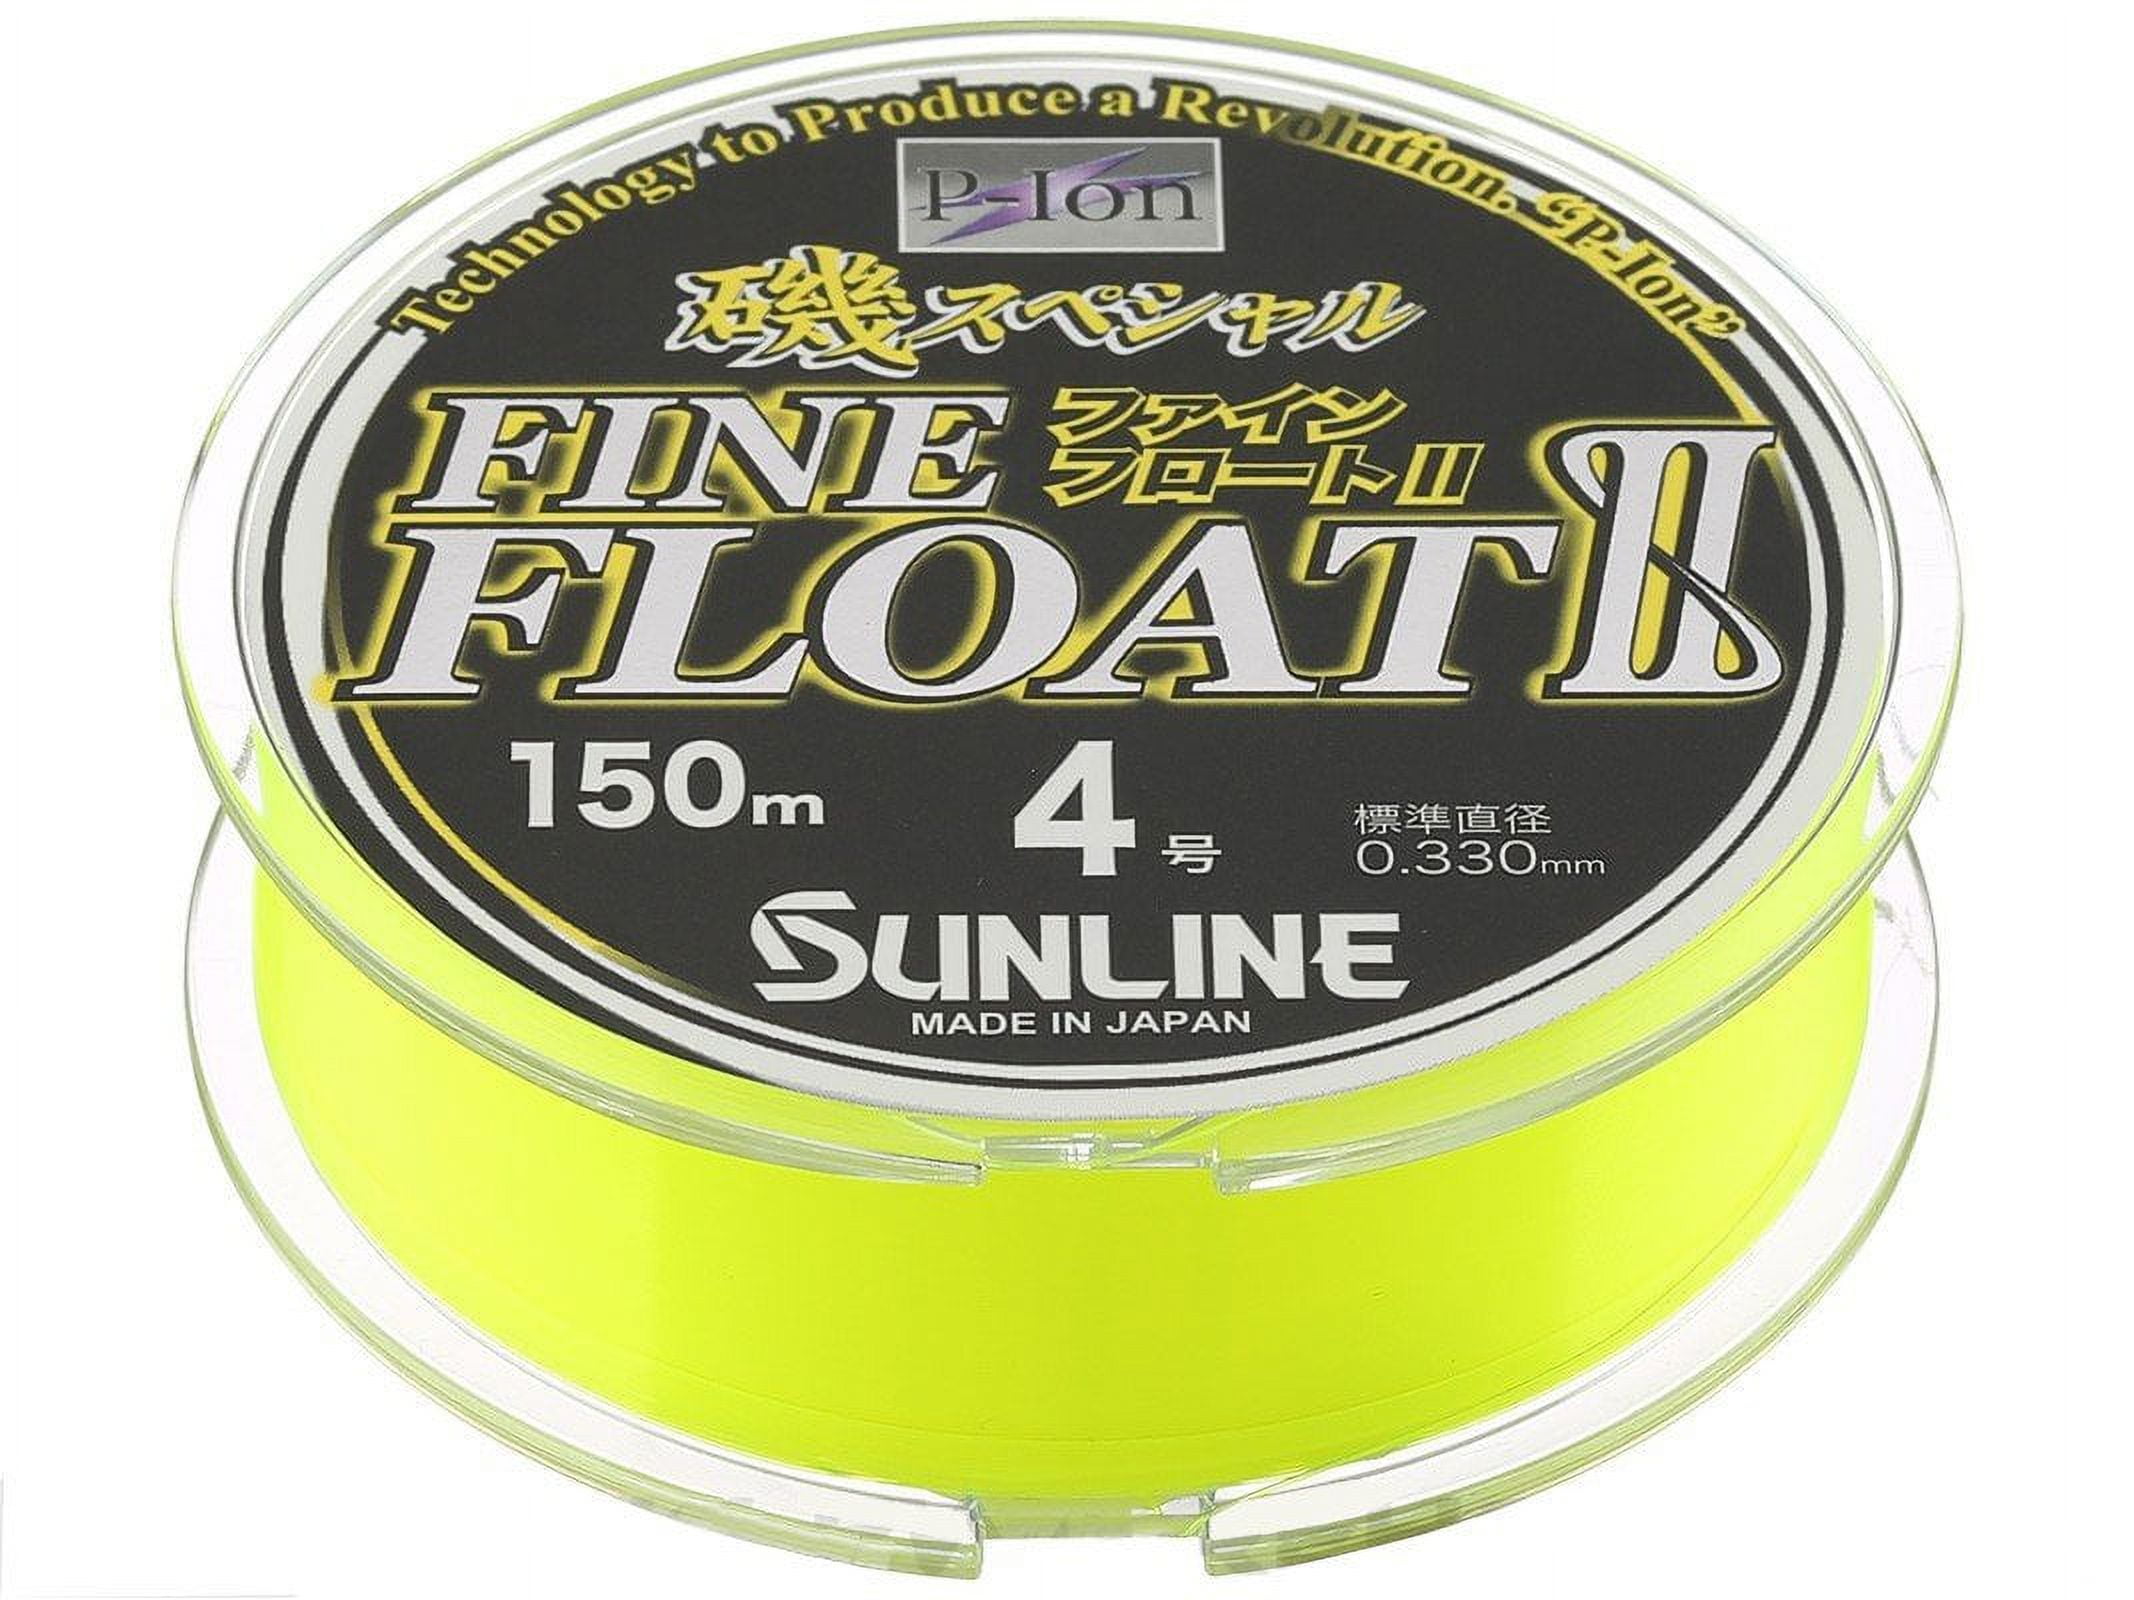 Sunline Siglon Fine Float II P-ion Vivid Yellow Monofilament 165